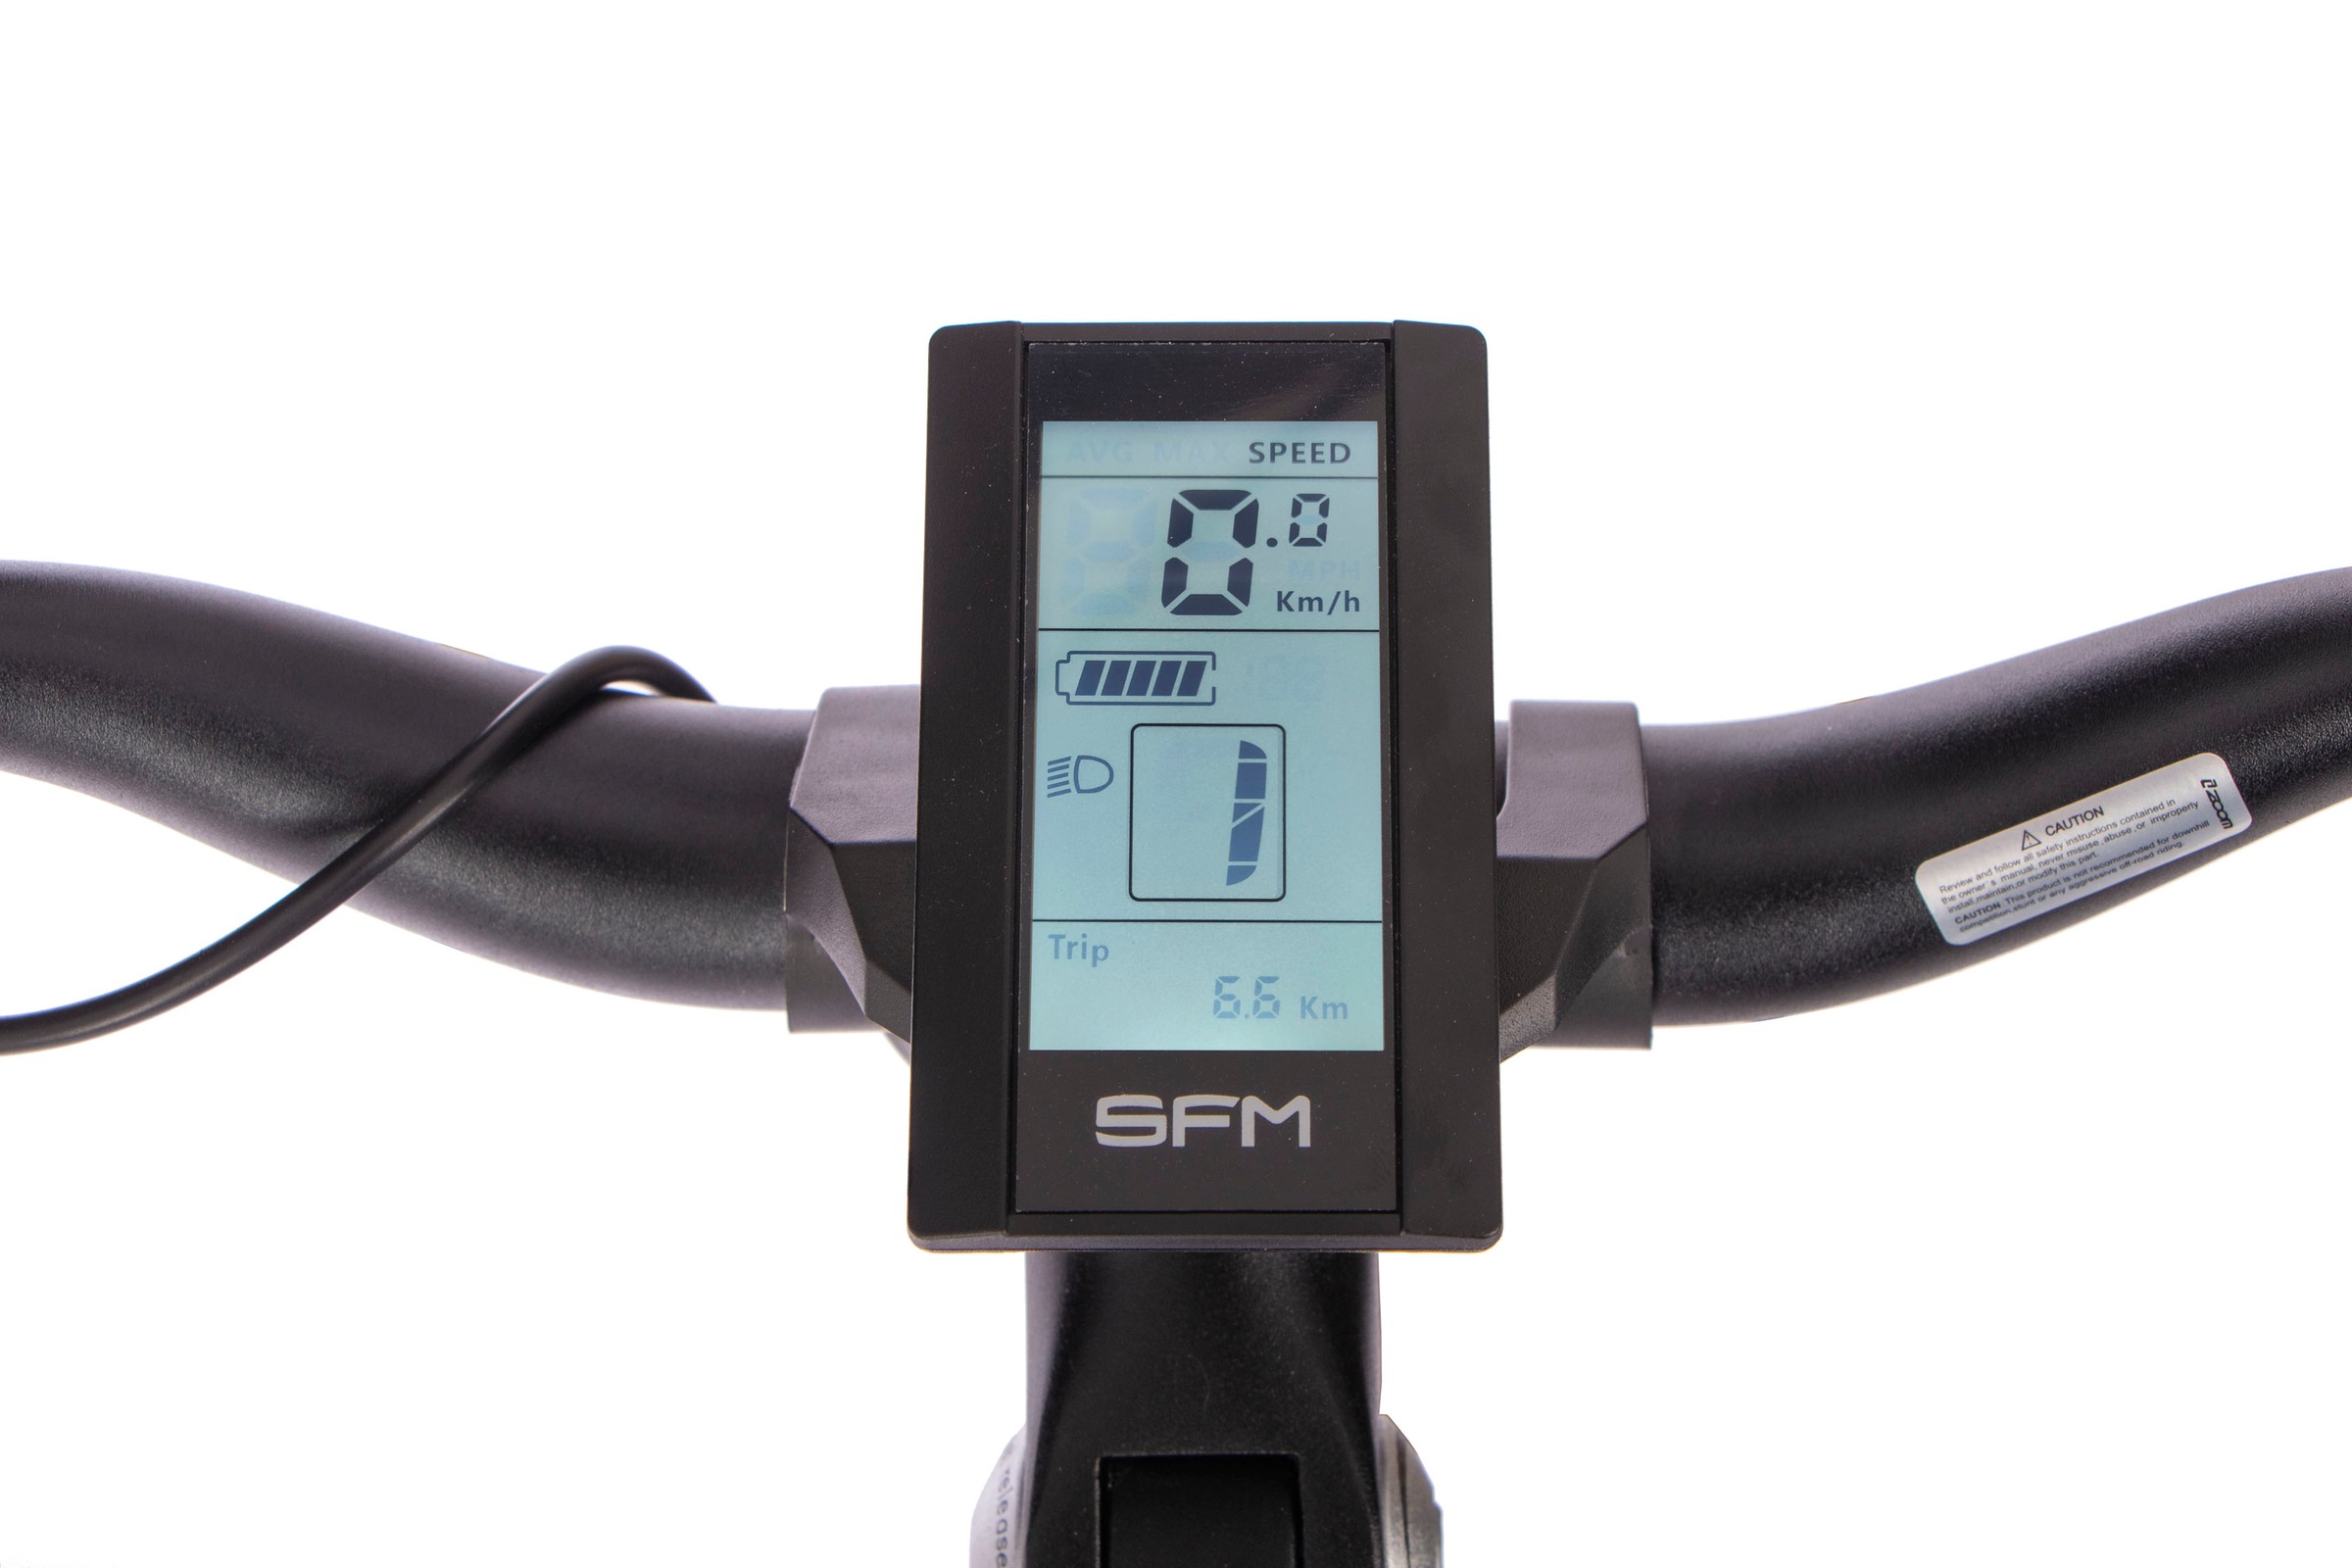 SAXONETTE E-Bike »Premium Plus 3.0«, 8 Gang, Mittelmotor 250 W, Pedelec